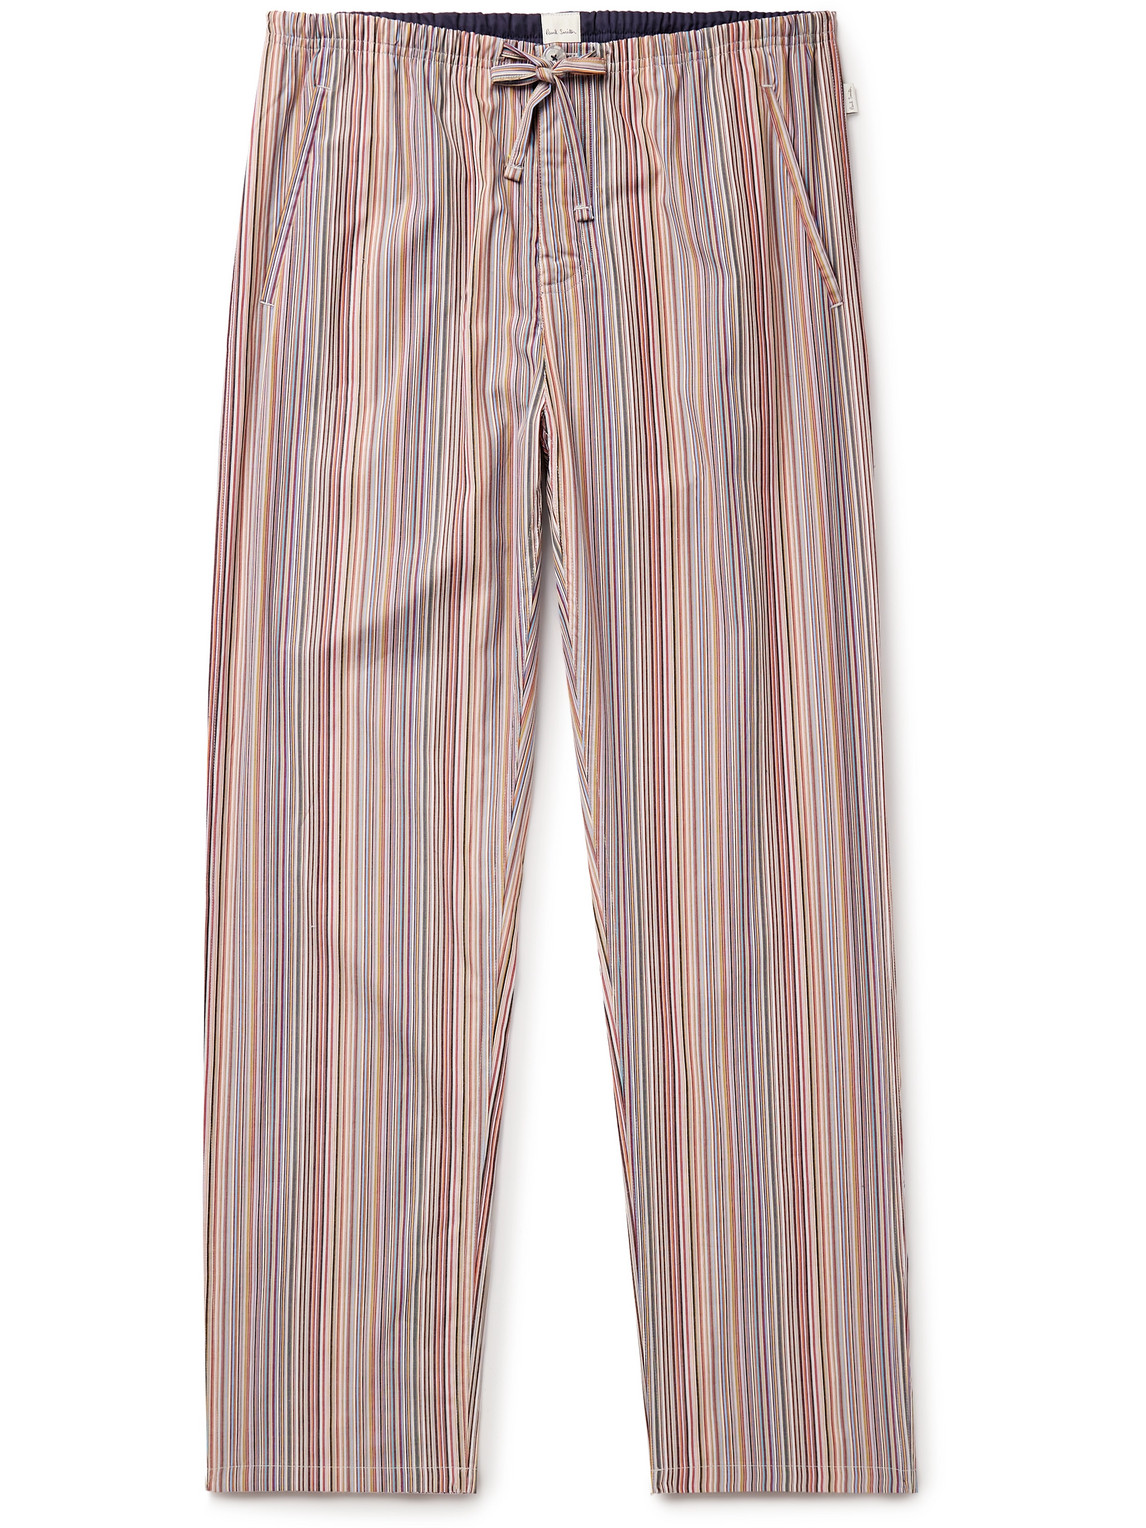 Striped Cotton Pyjama Trousers